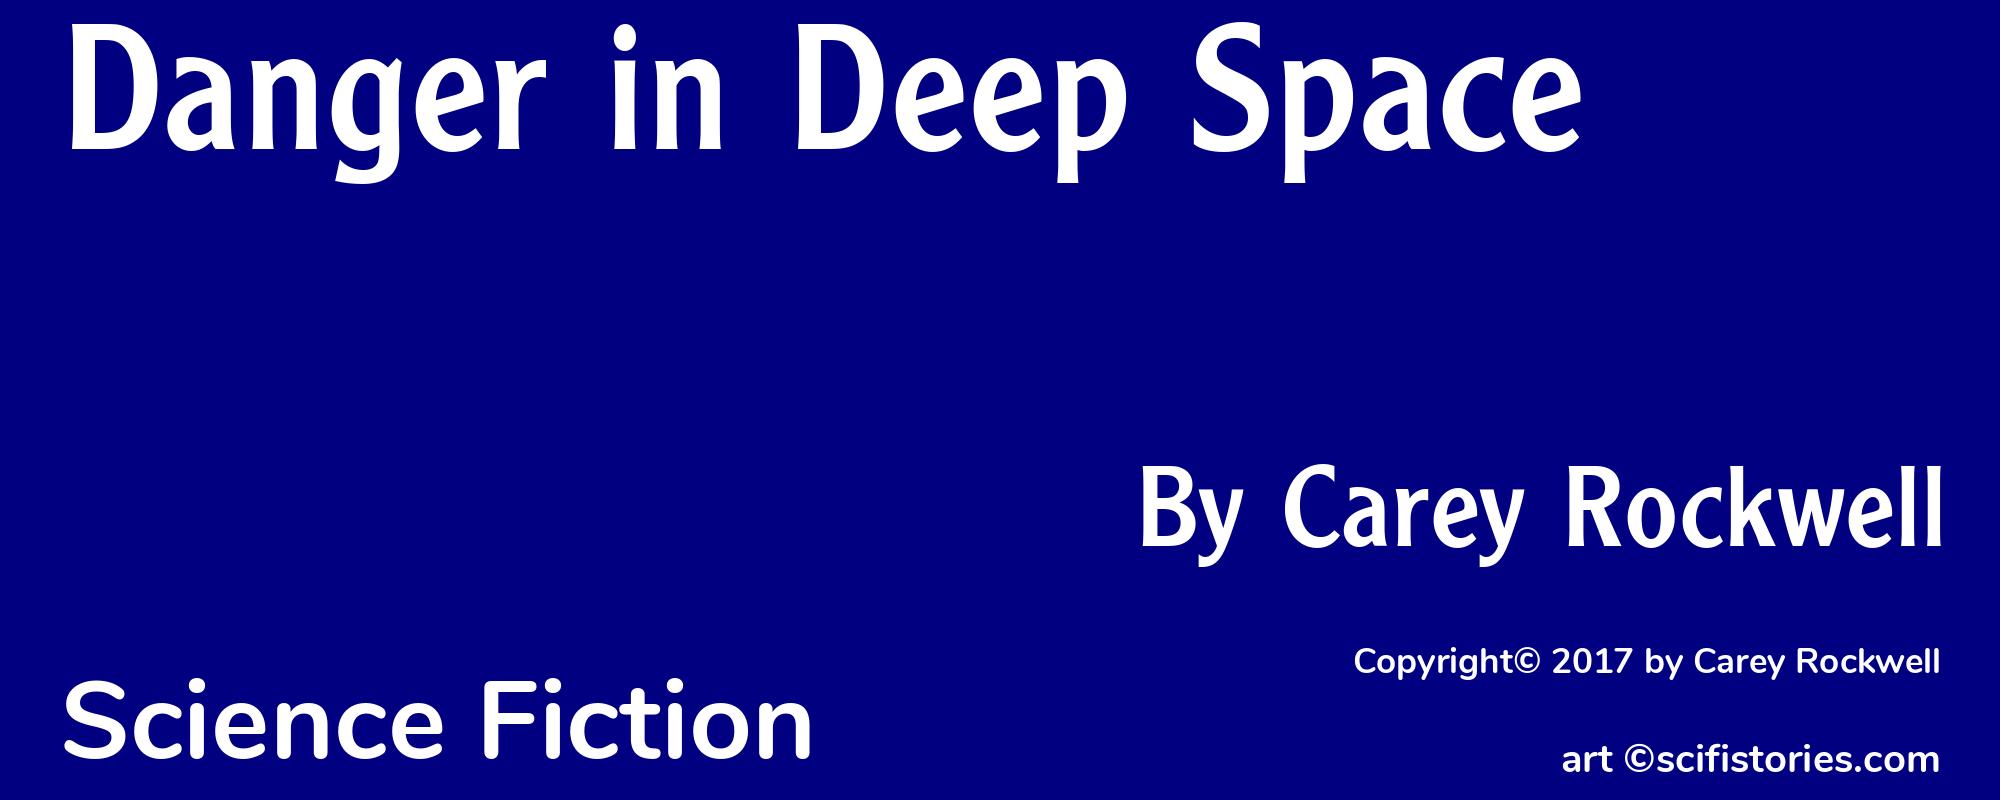 Danger in Deep Space - Cover